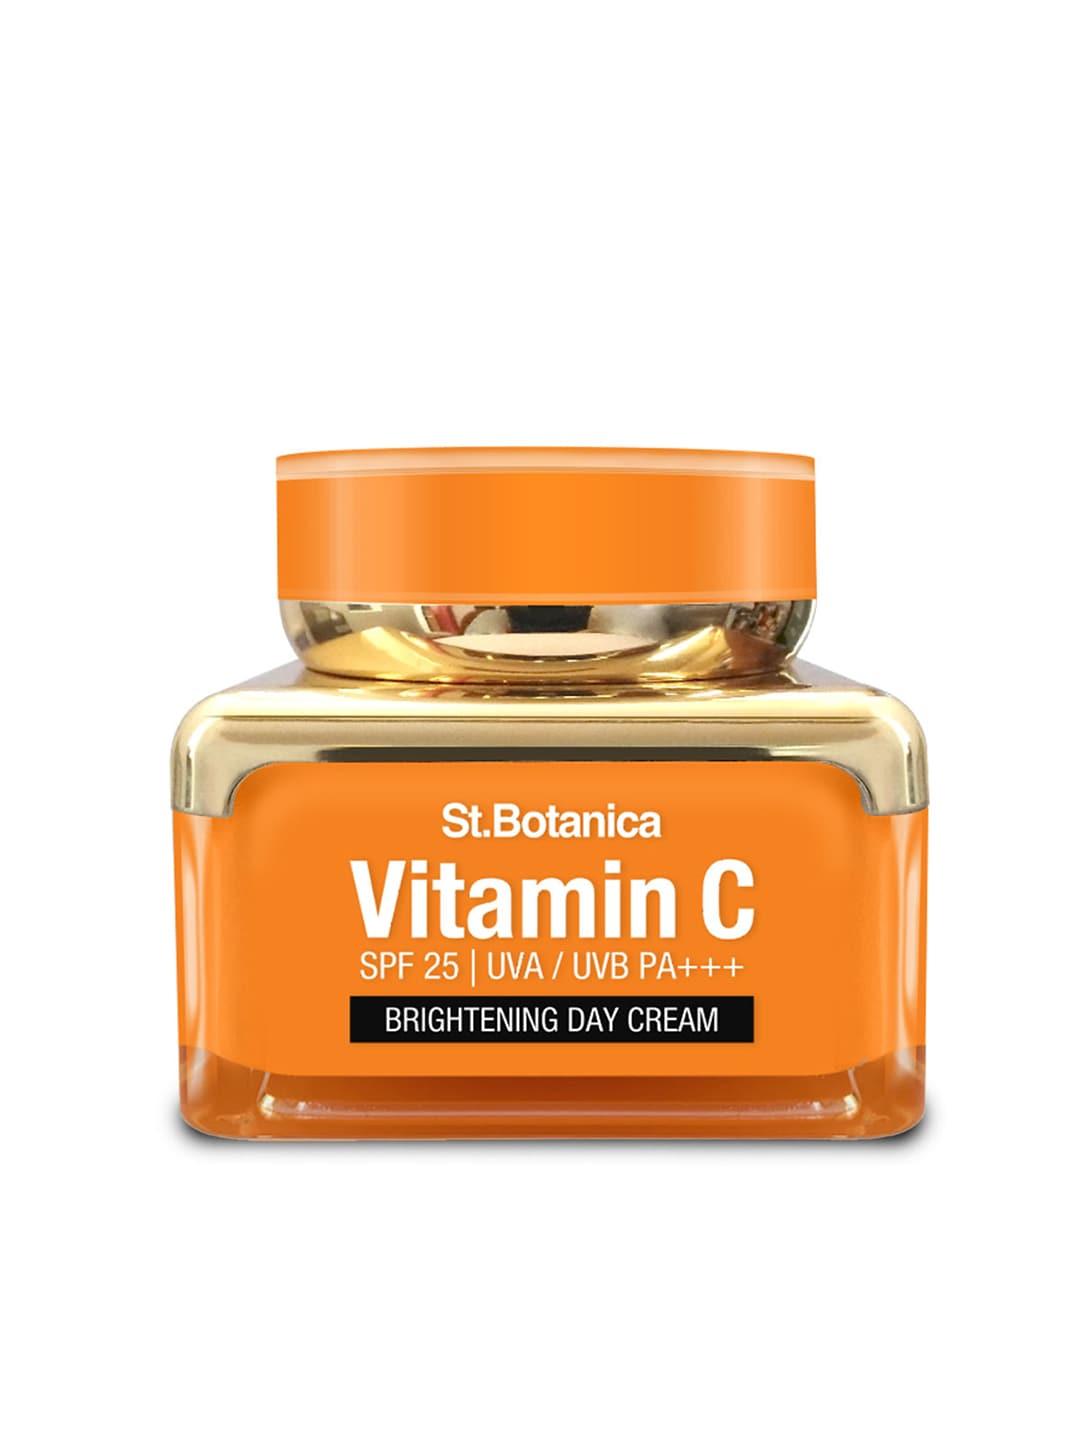 StBotanica Vitamin C Brightening Day Cream With SPF 30 UVA/UVB PA+++ - 50g